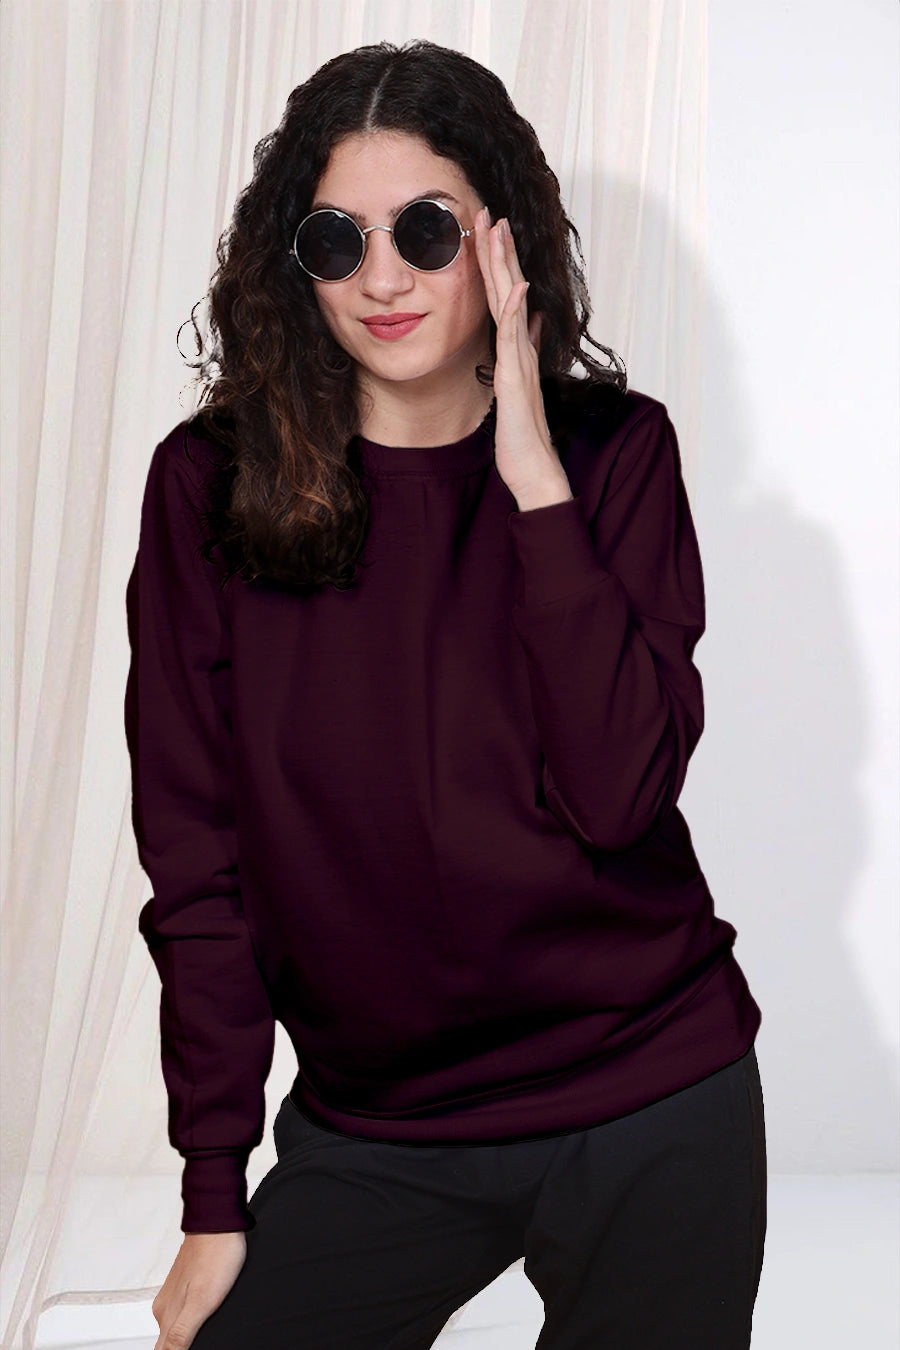 Round Neck Plain Women Sweatshirt : Fleece Cotton 260 GSM Brand, Size: Small  at Rs 402/piece in Thane